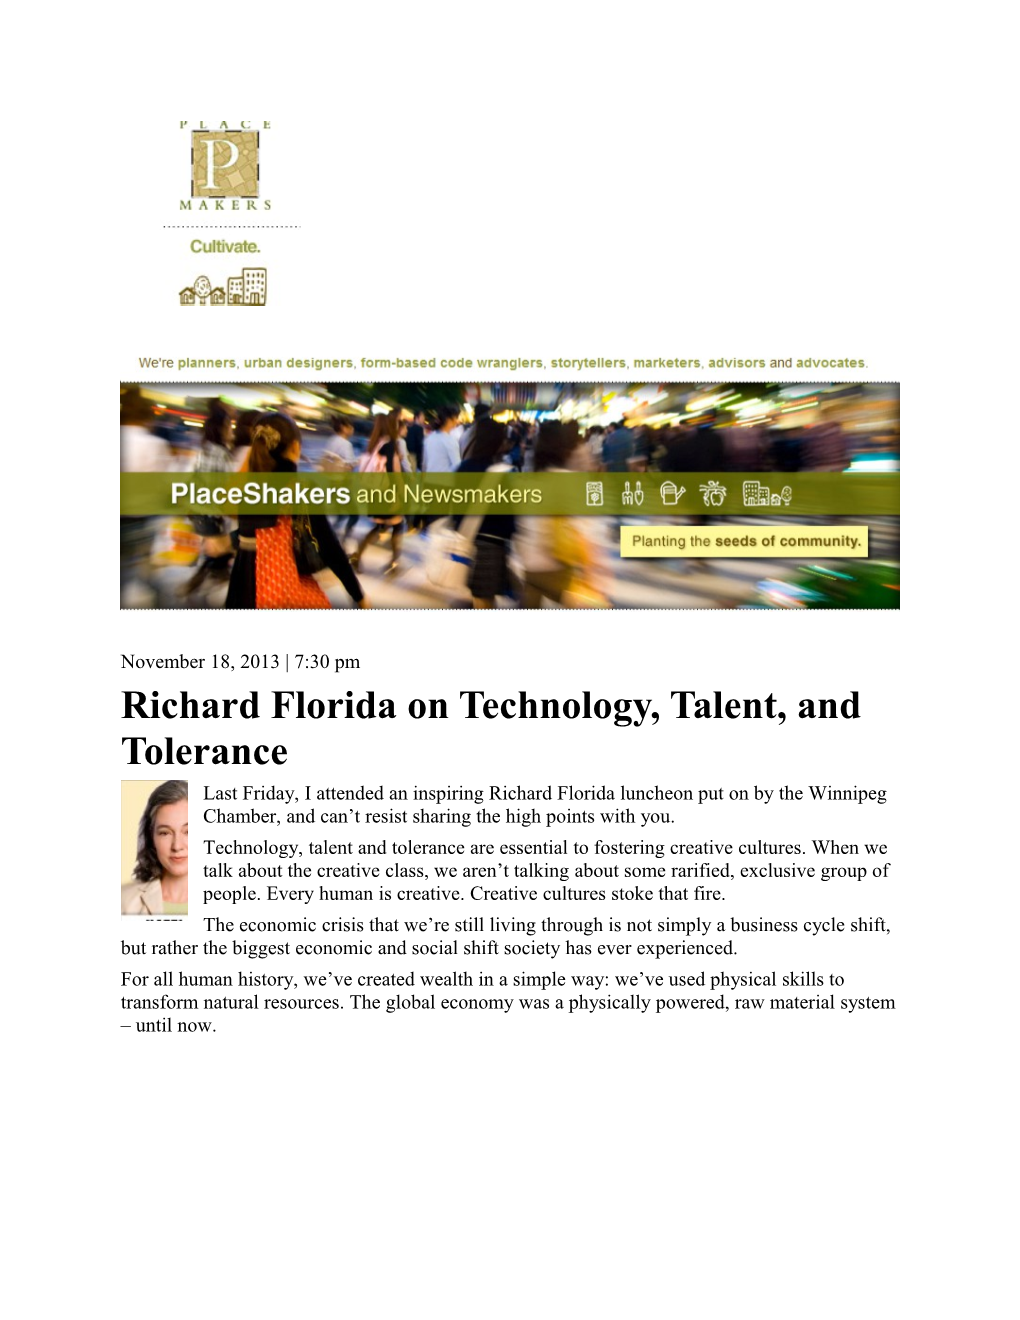 Richard Florida on Technology, Talent, and Tolerance